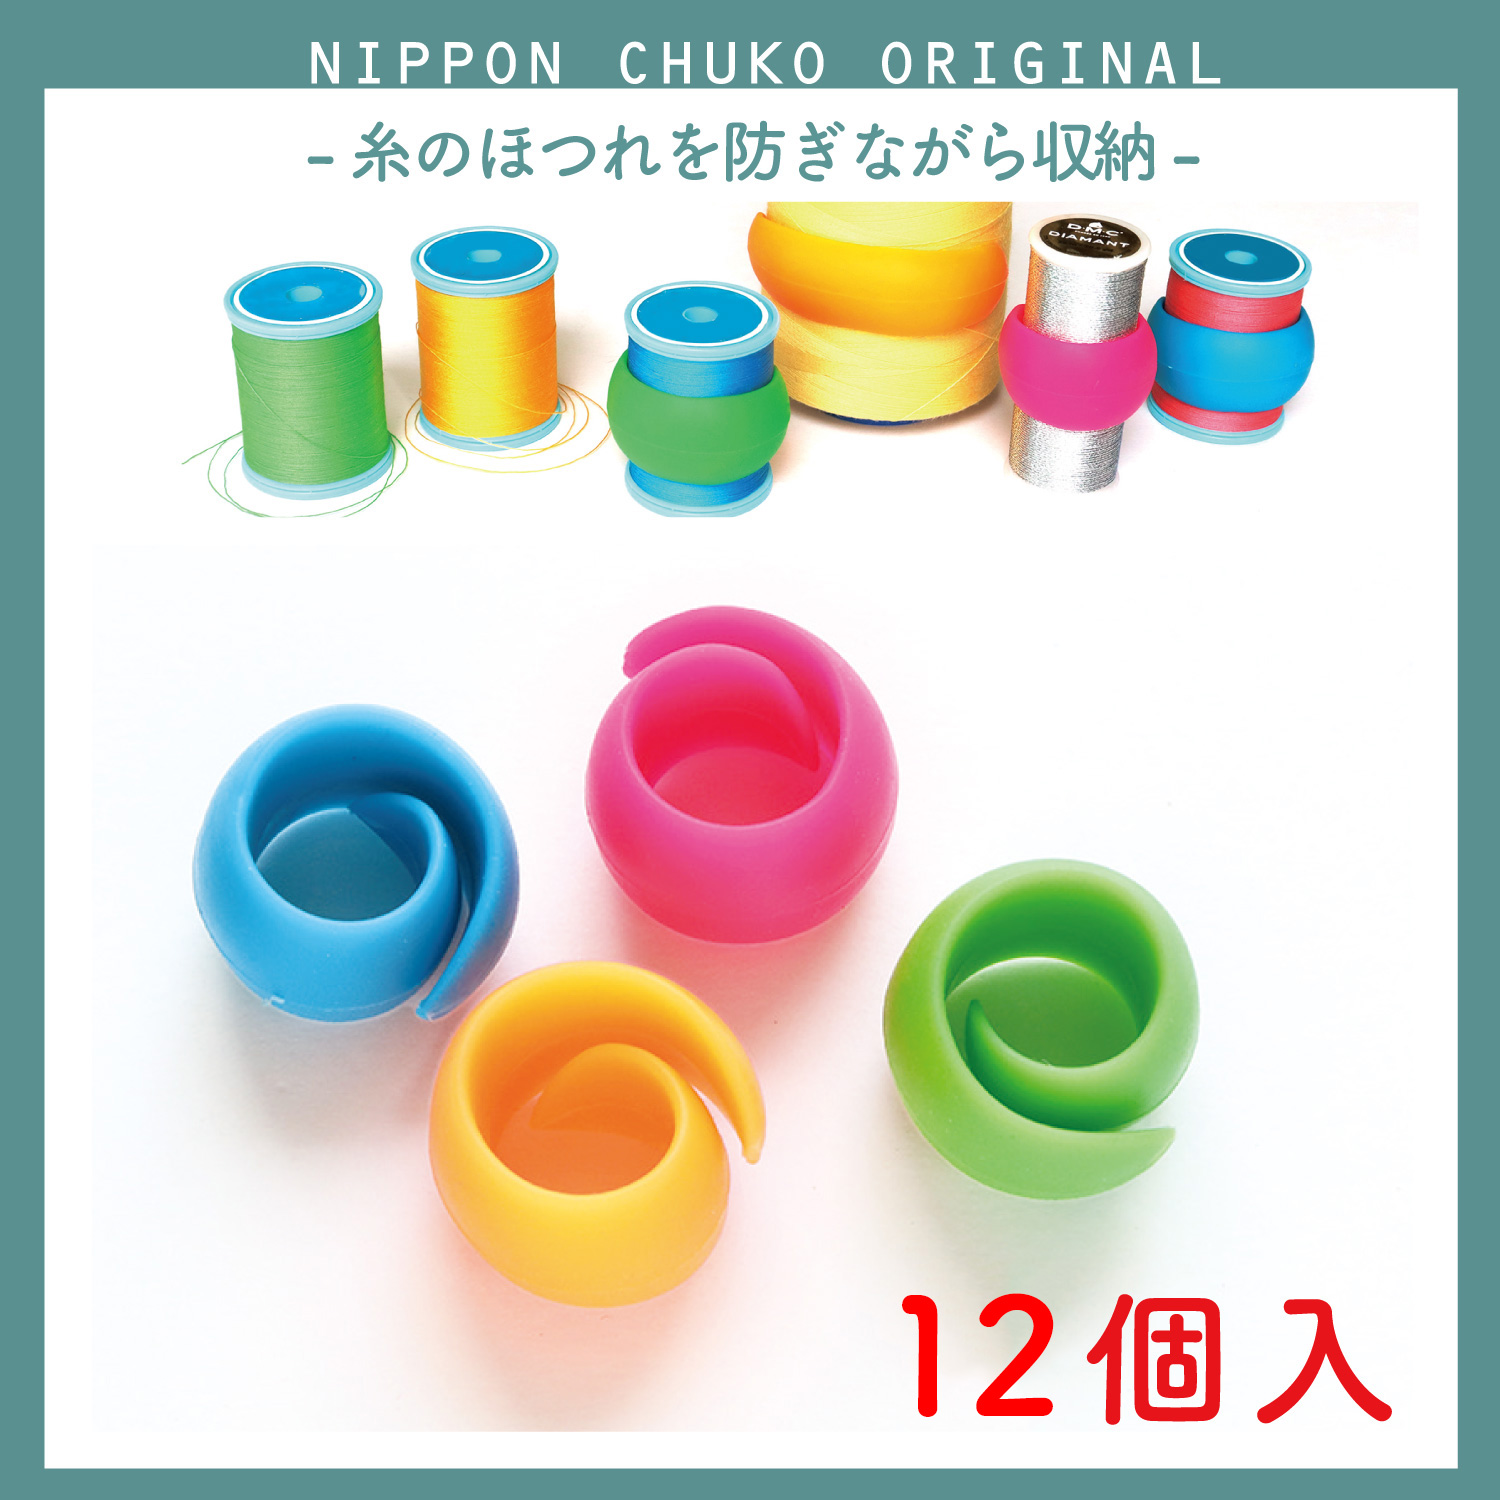 NI-02437-3 Bobbin Thread Holder 1 piece each for 4 colors x 3pack set (set)